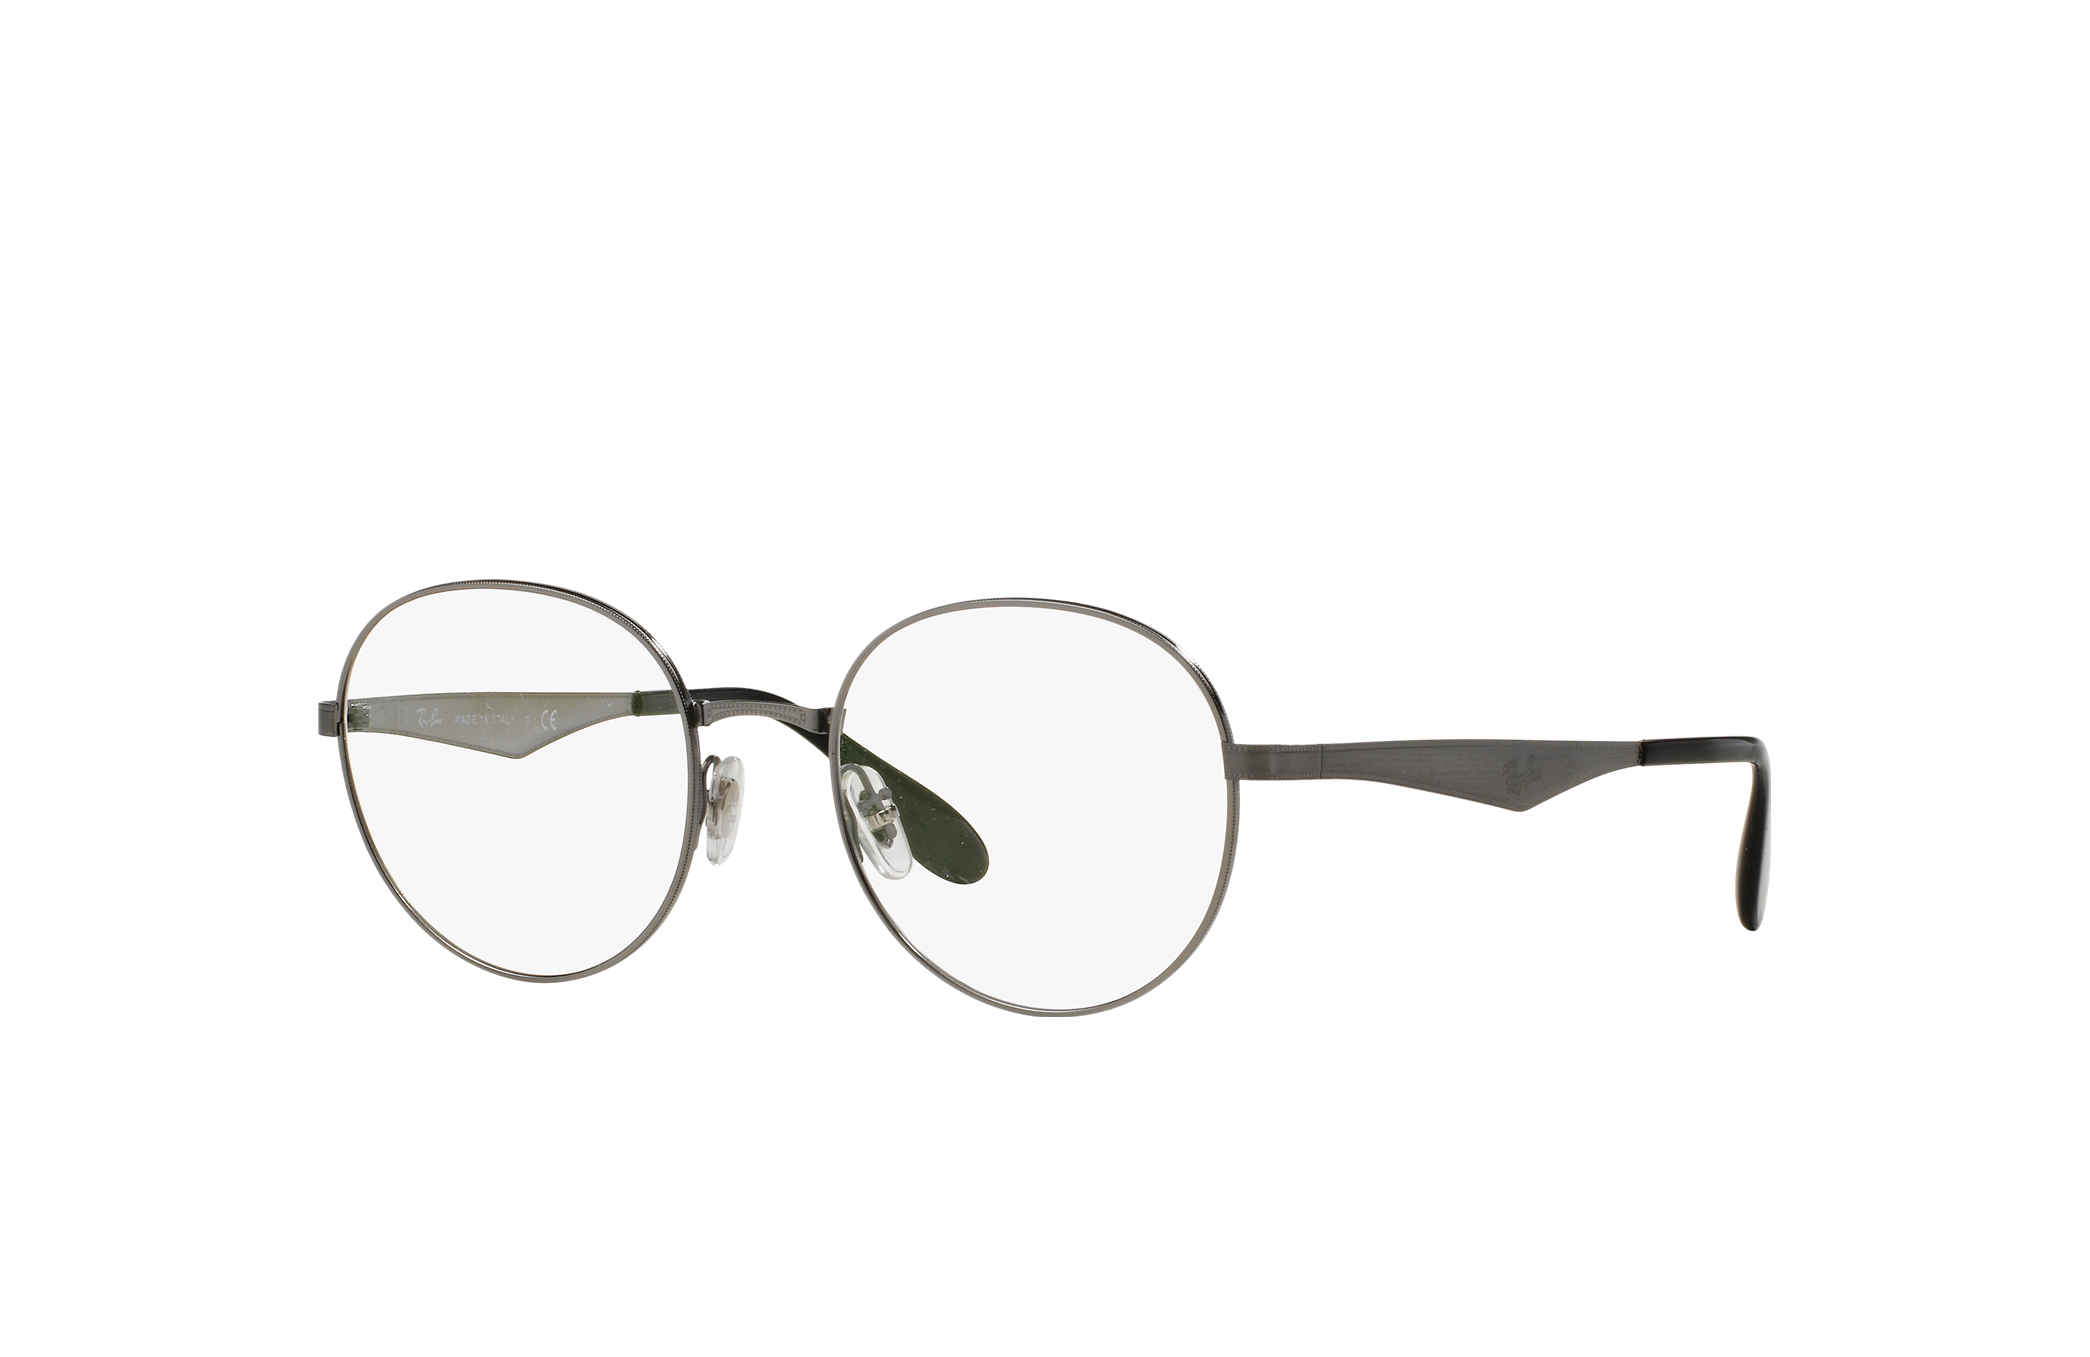 Rb6343 Eyeglasses with Gunmetal Frame | Ray-Ban®